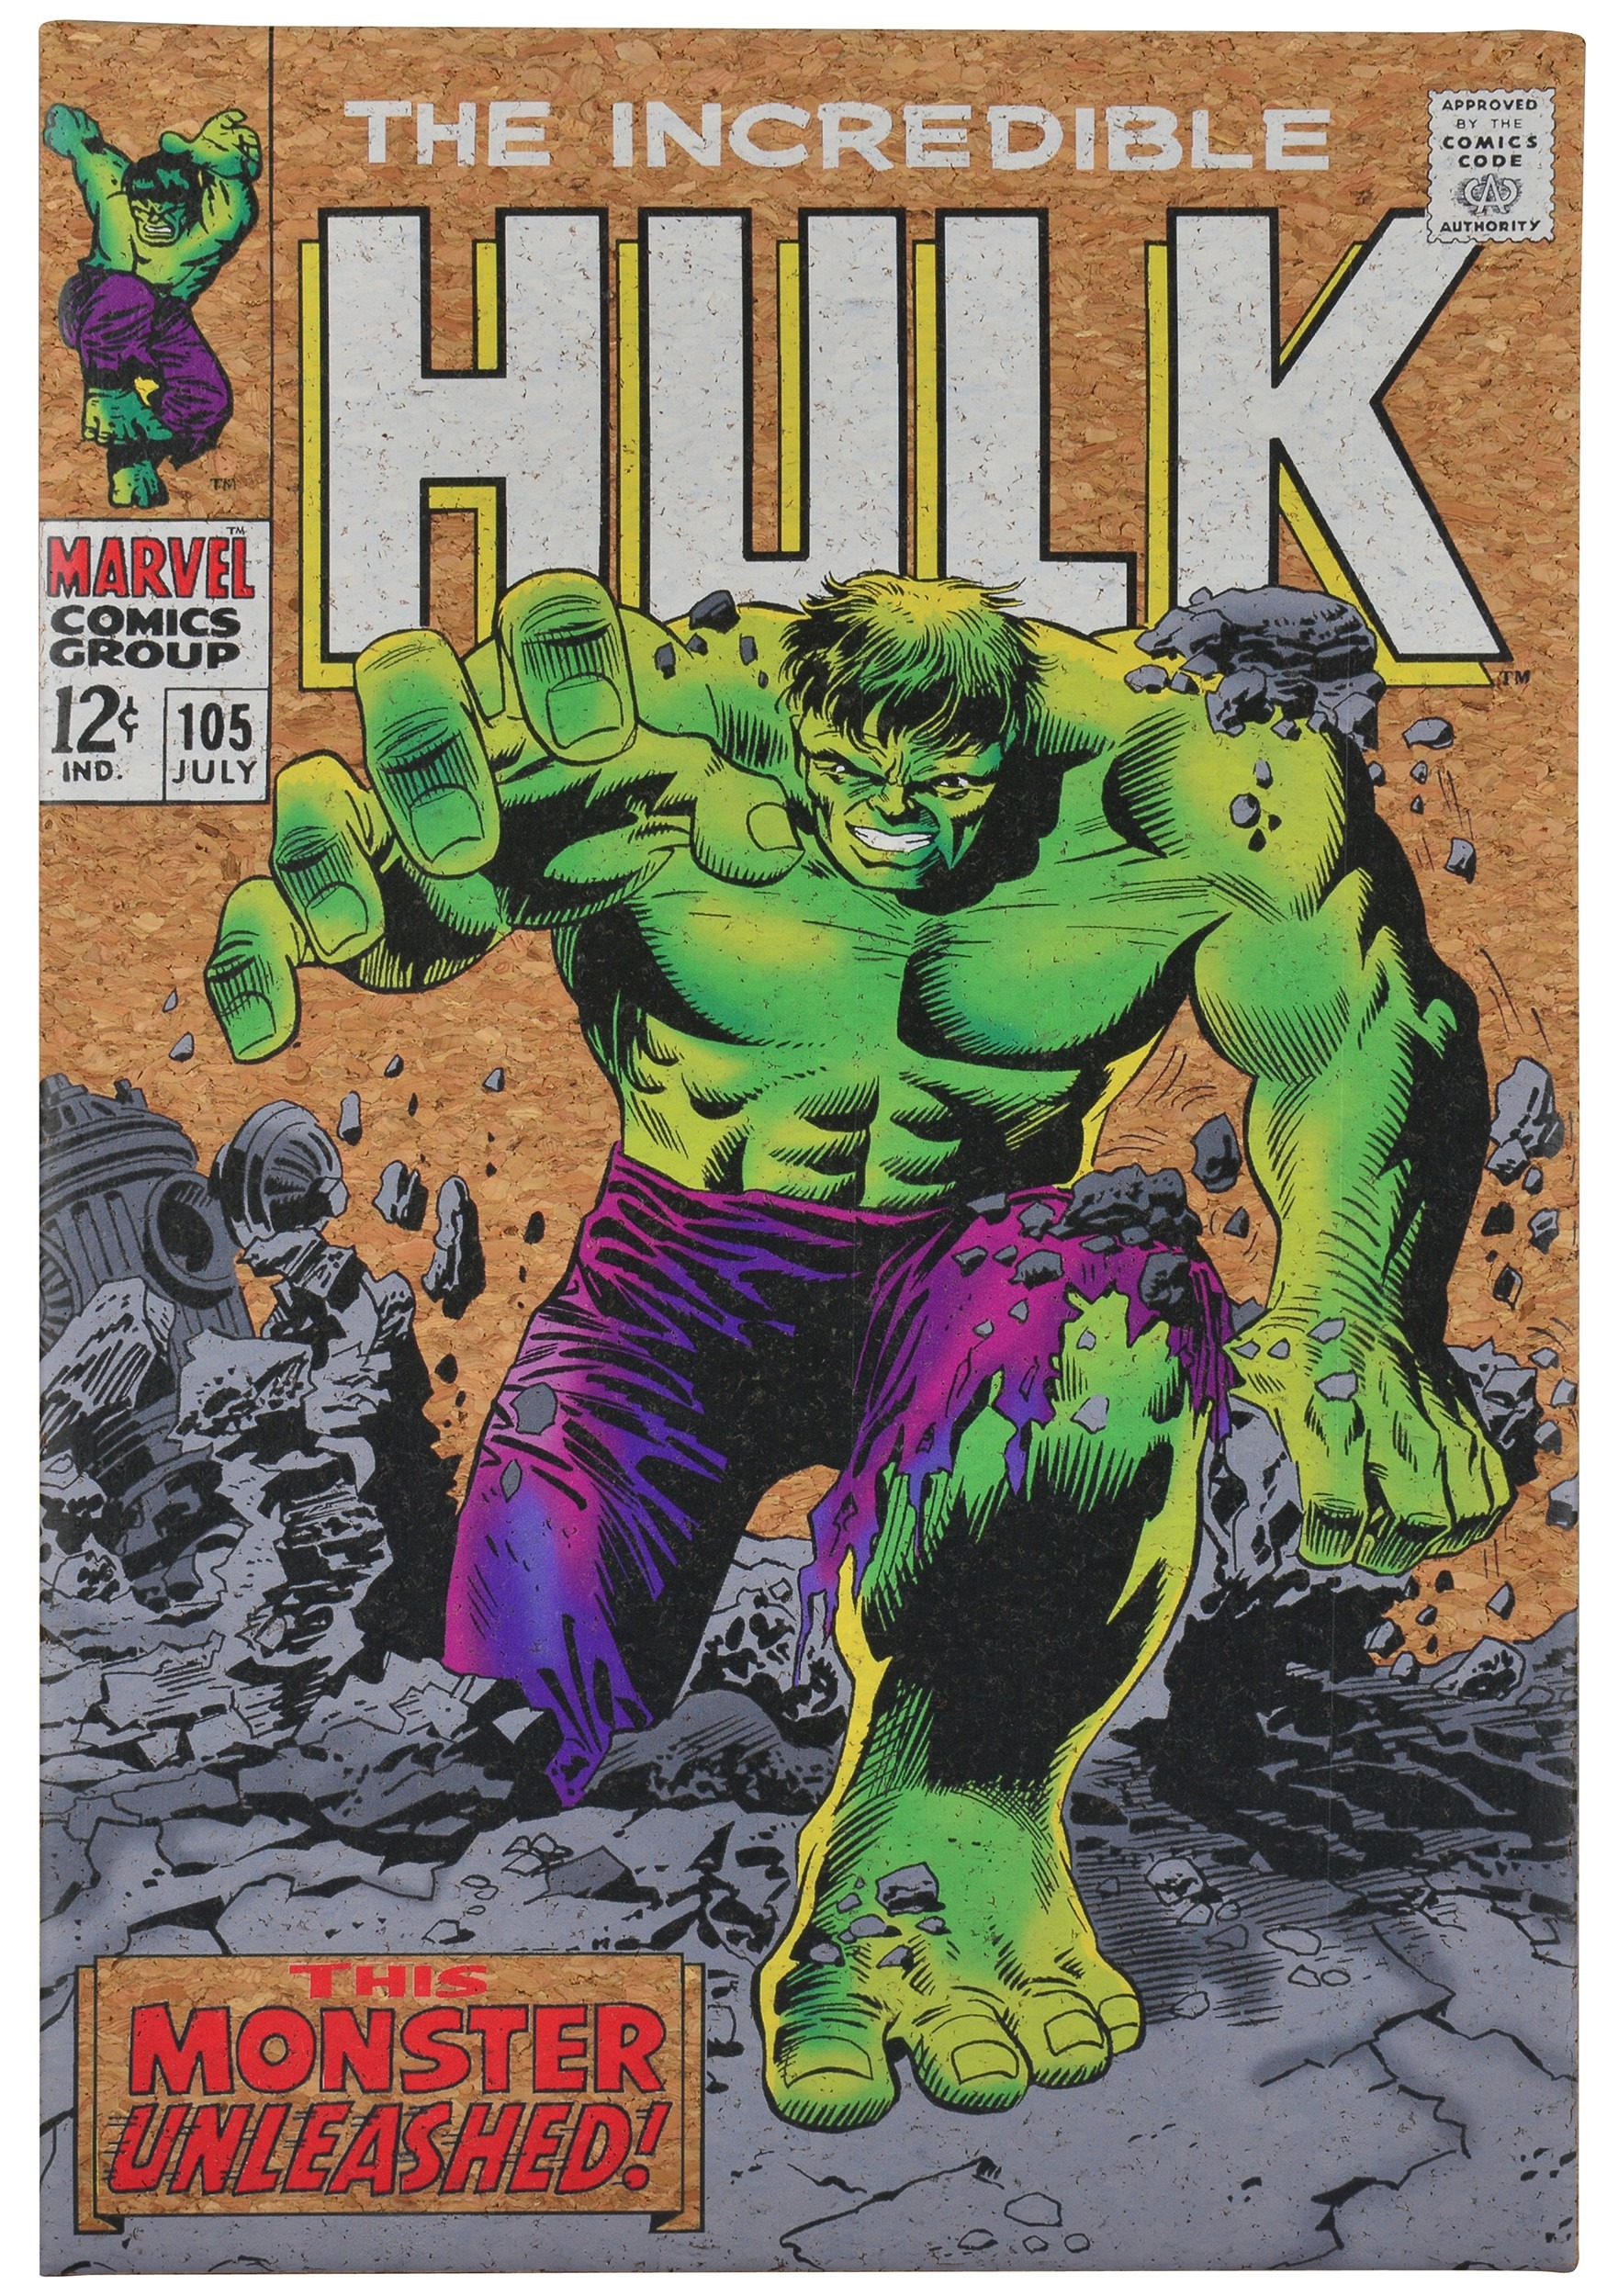 12" x 17.5" Marvel Incredible Hulk Corkboard Wall Art w/ Thumbtacks